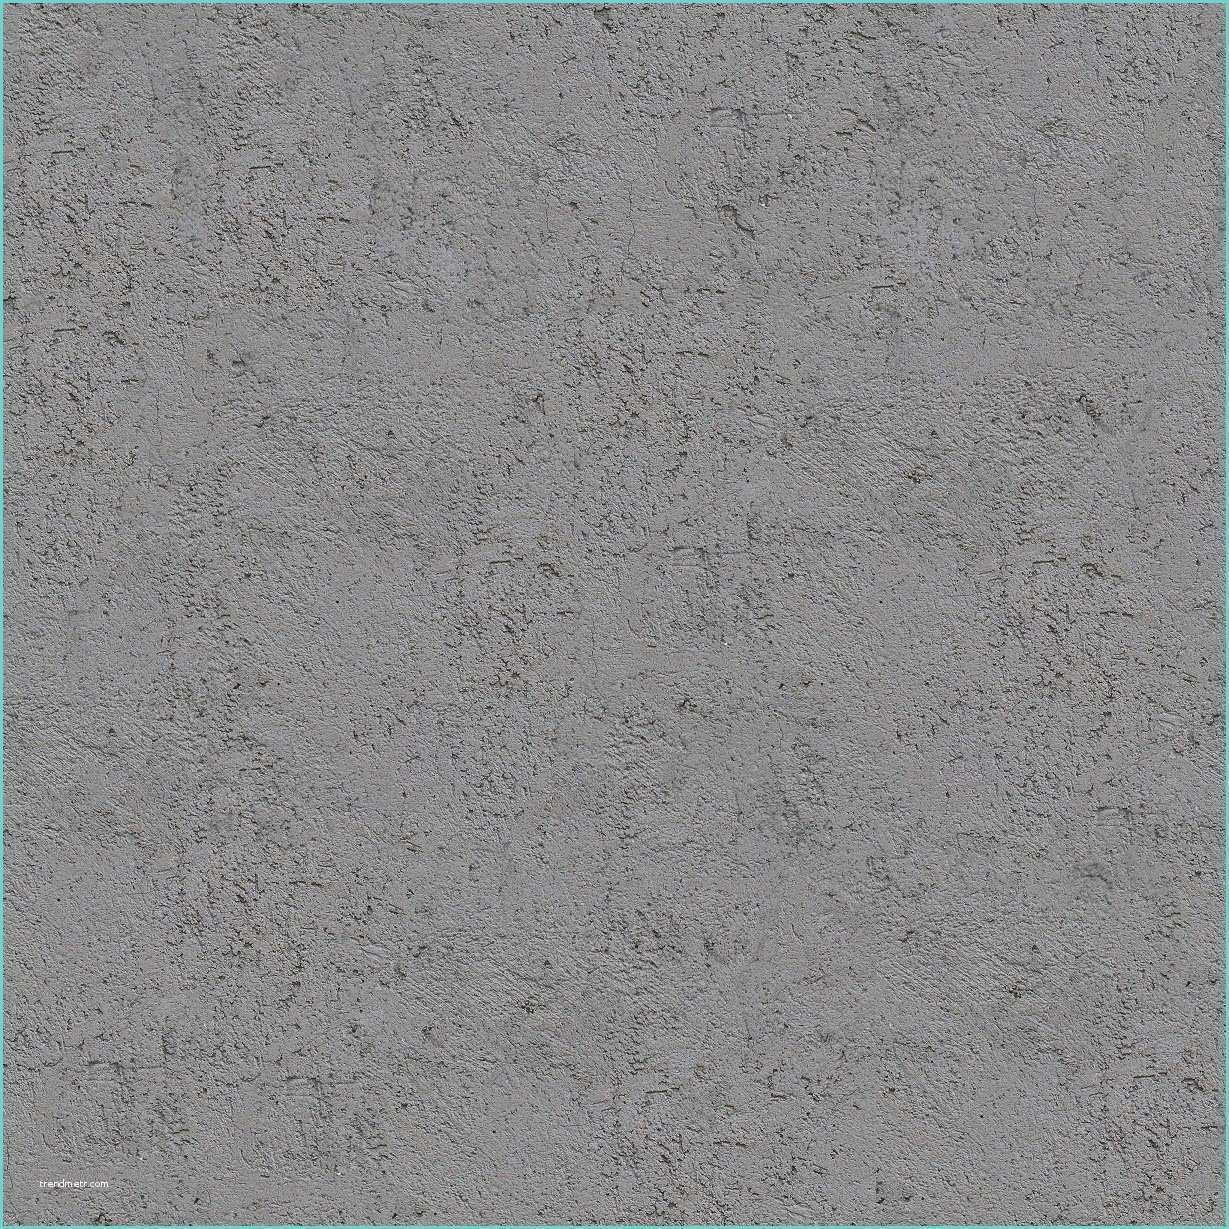 Texture Pavimentazione Esterna Cemento Simo 3d Texture Seamless Cemento